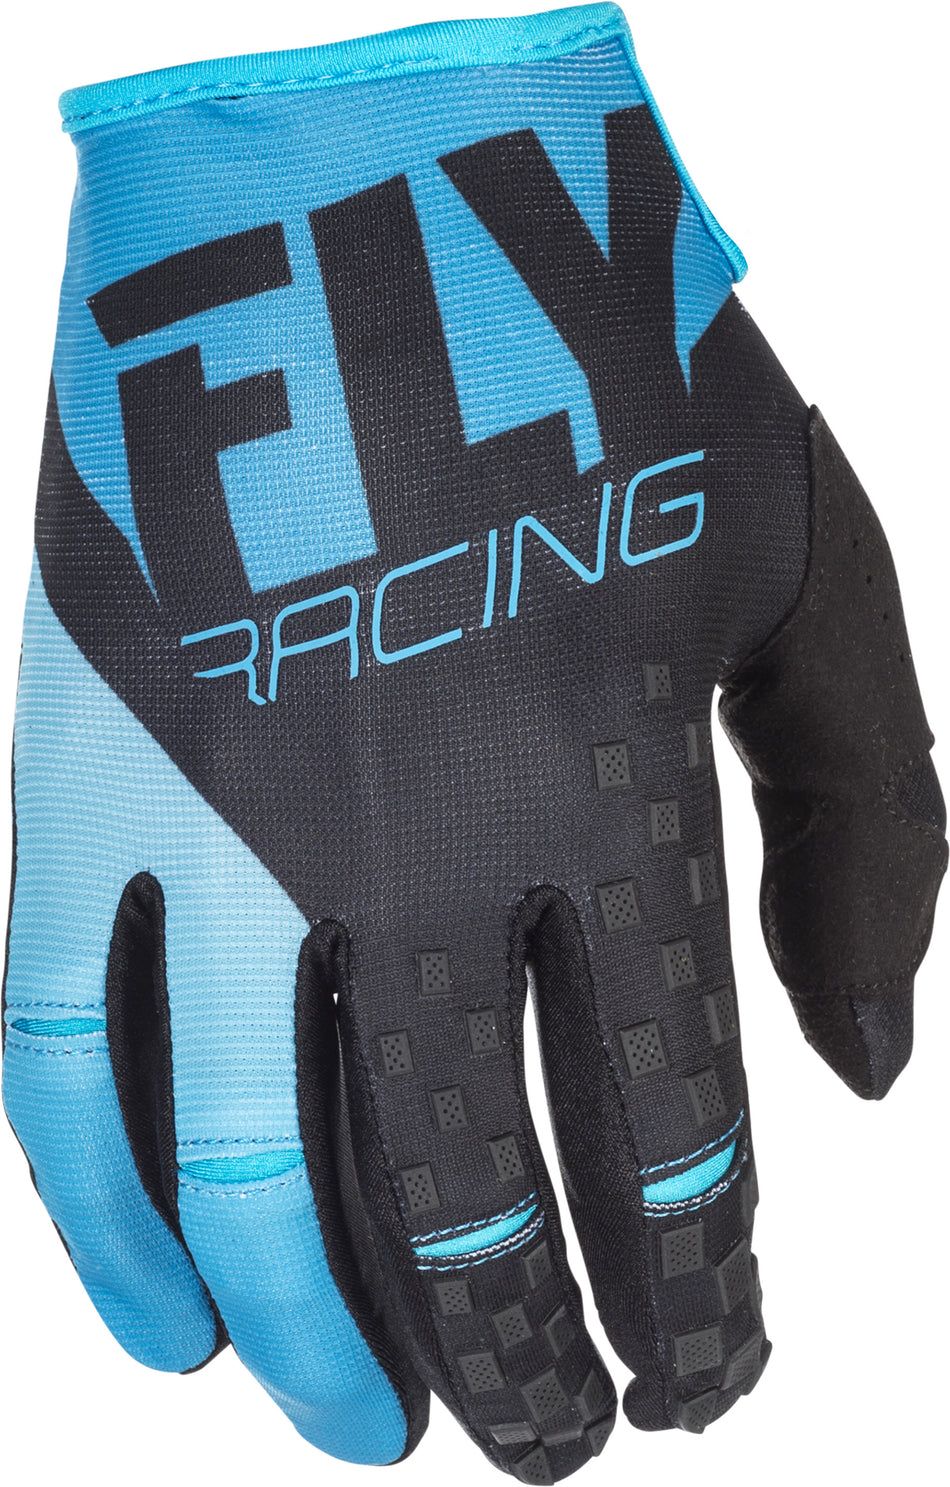 FLY RACING Kinetic Gloves Blue/Black Sz 4 371-41104